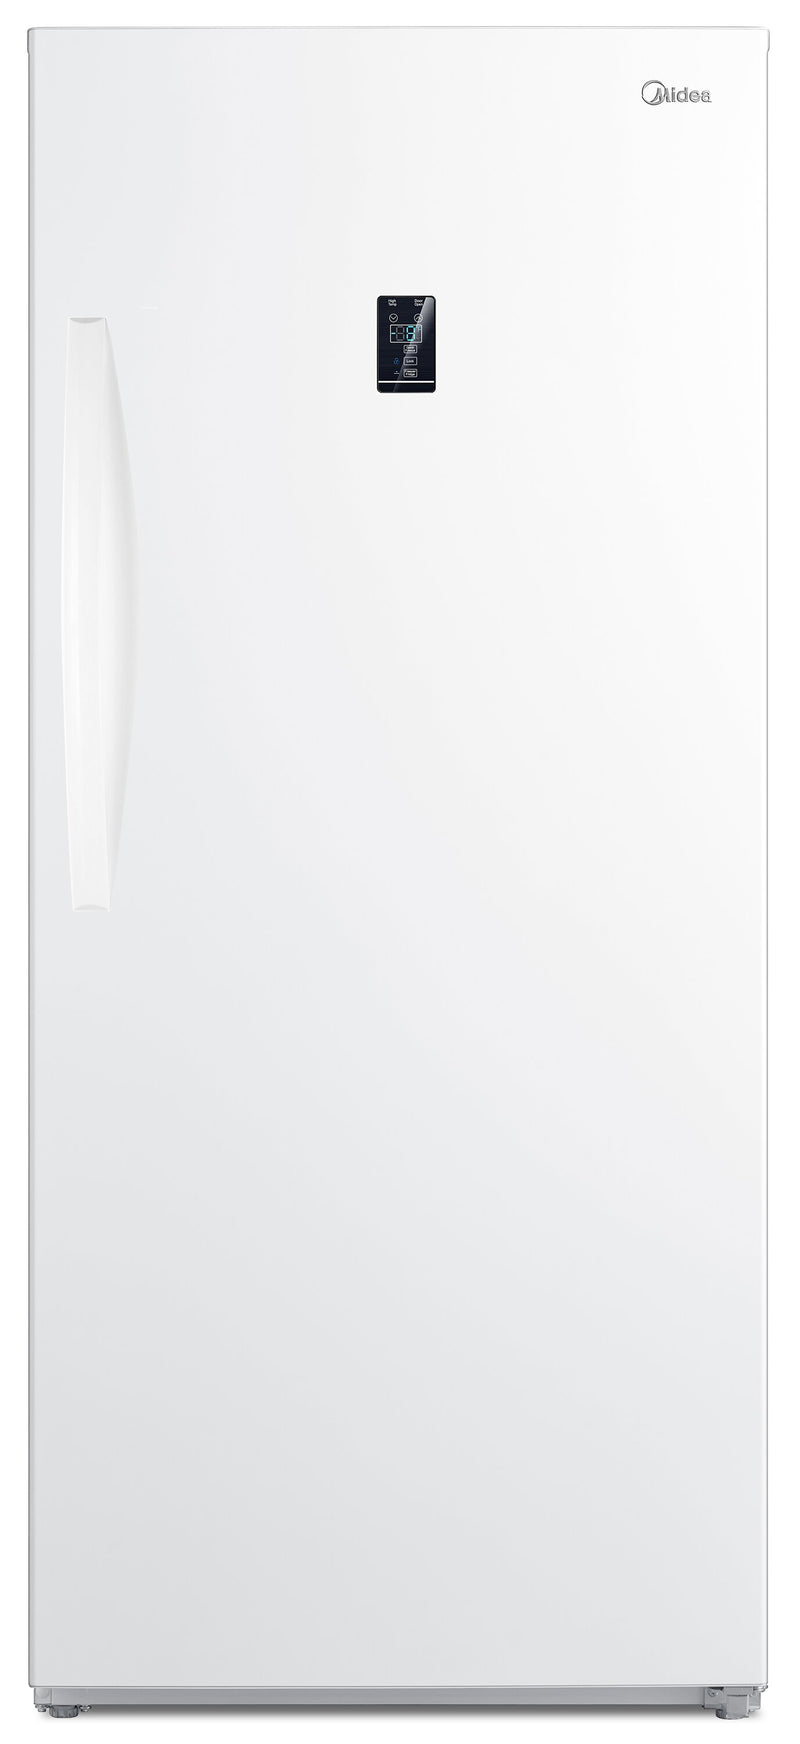 Midea 13.8 Cu. Ft. Convertible Upright Refrigerator-Freezer - MU138SWAR1RC1|Appareil vertical convertible de réfrigérateur à congélateur Midea de 13.8 pi³ - MU138SWAR1RC1|MU138SWA